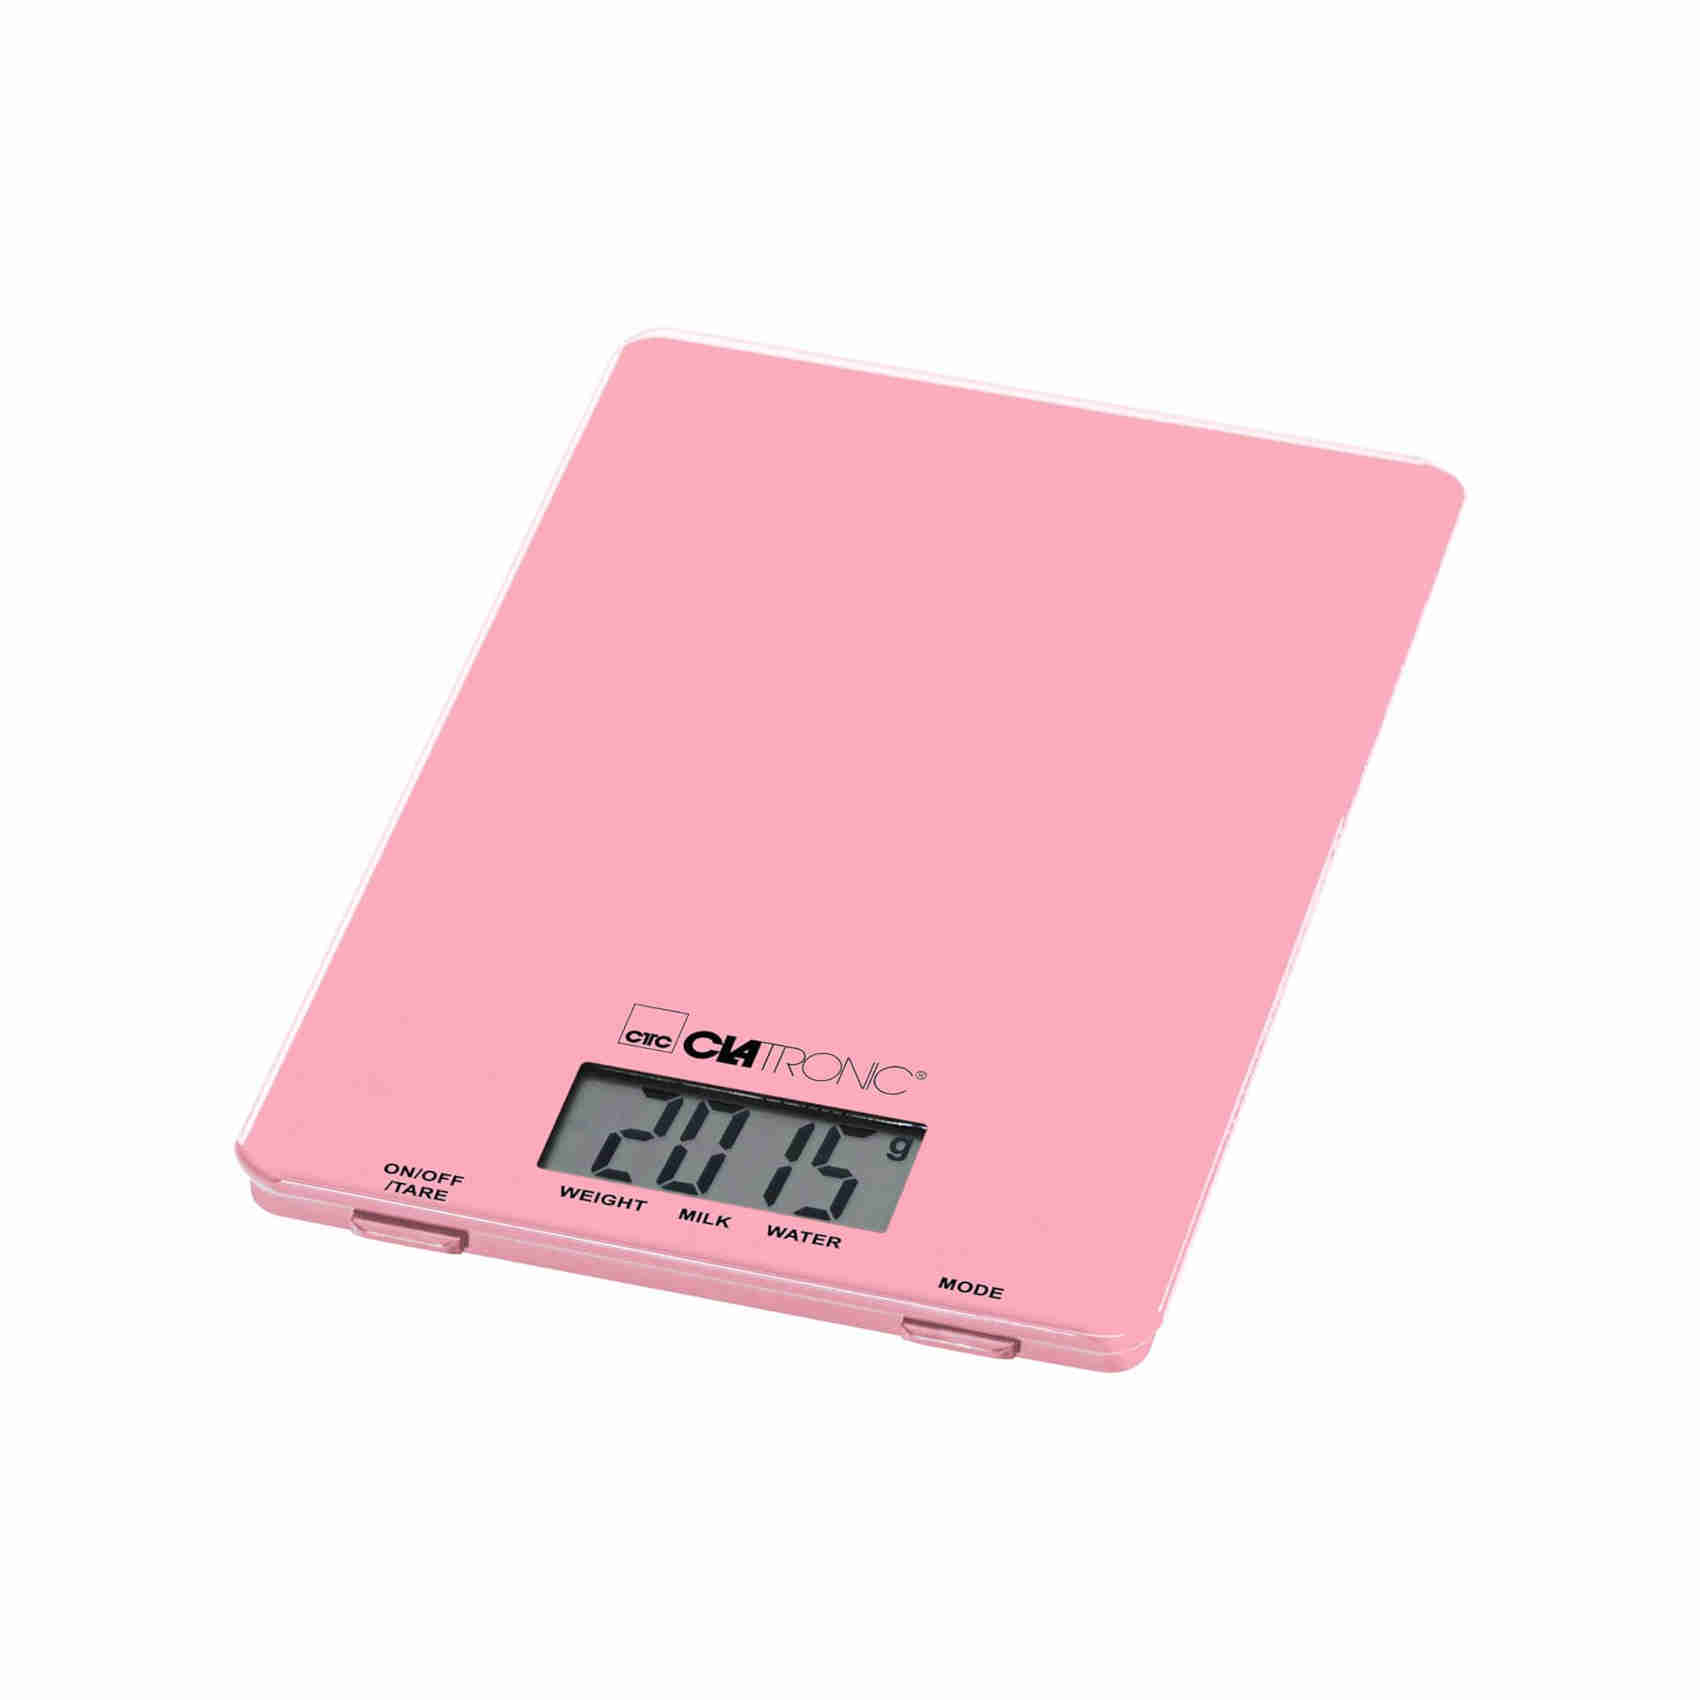 clatronic kw 3626 - bilancia da cucina fino a 5 kg, superficie extra piatta, funzione tara, display lcd, rosa, plastica, 220 x 150 x 16 mm bianco uomo